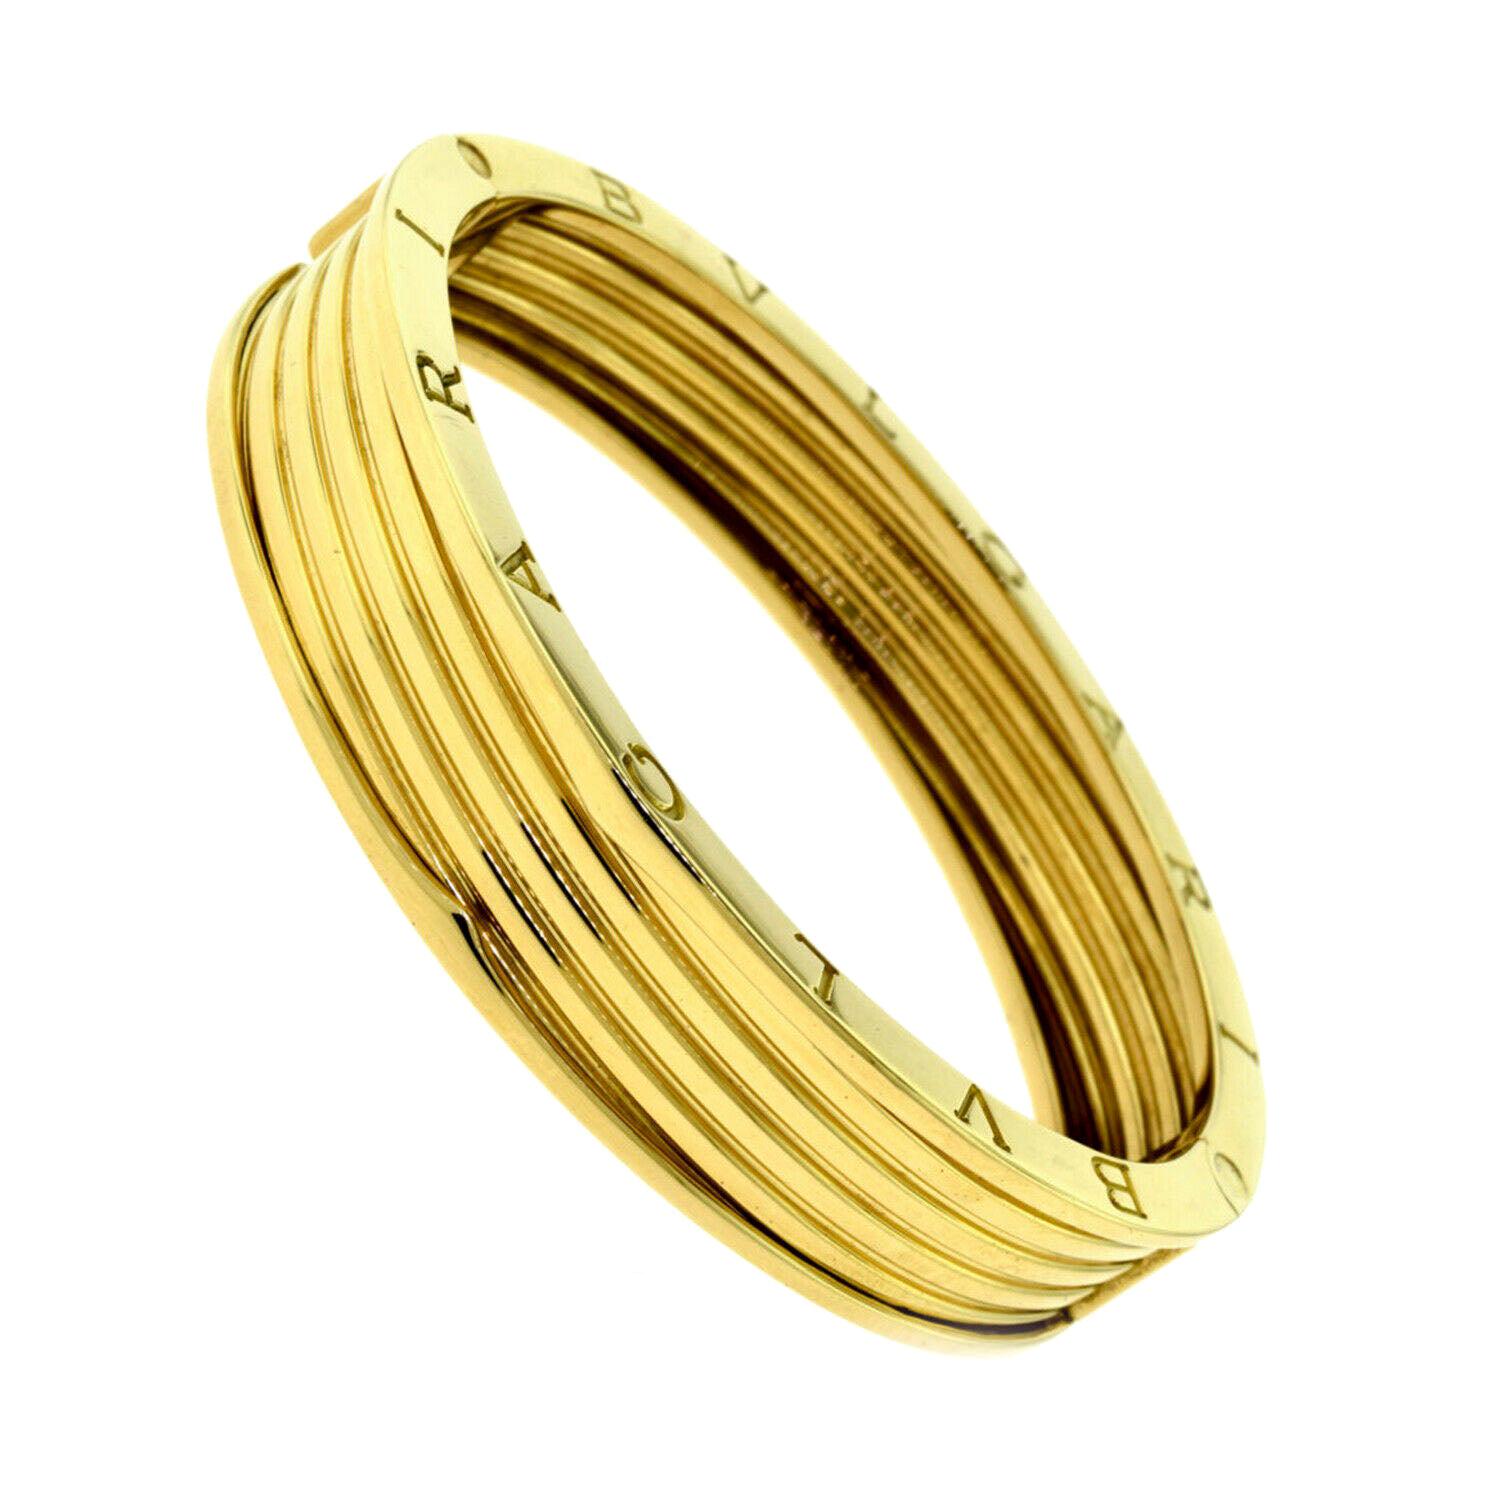 bvlgari gold cuff bracelet